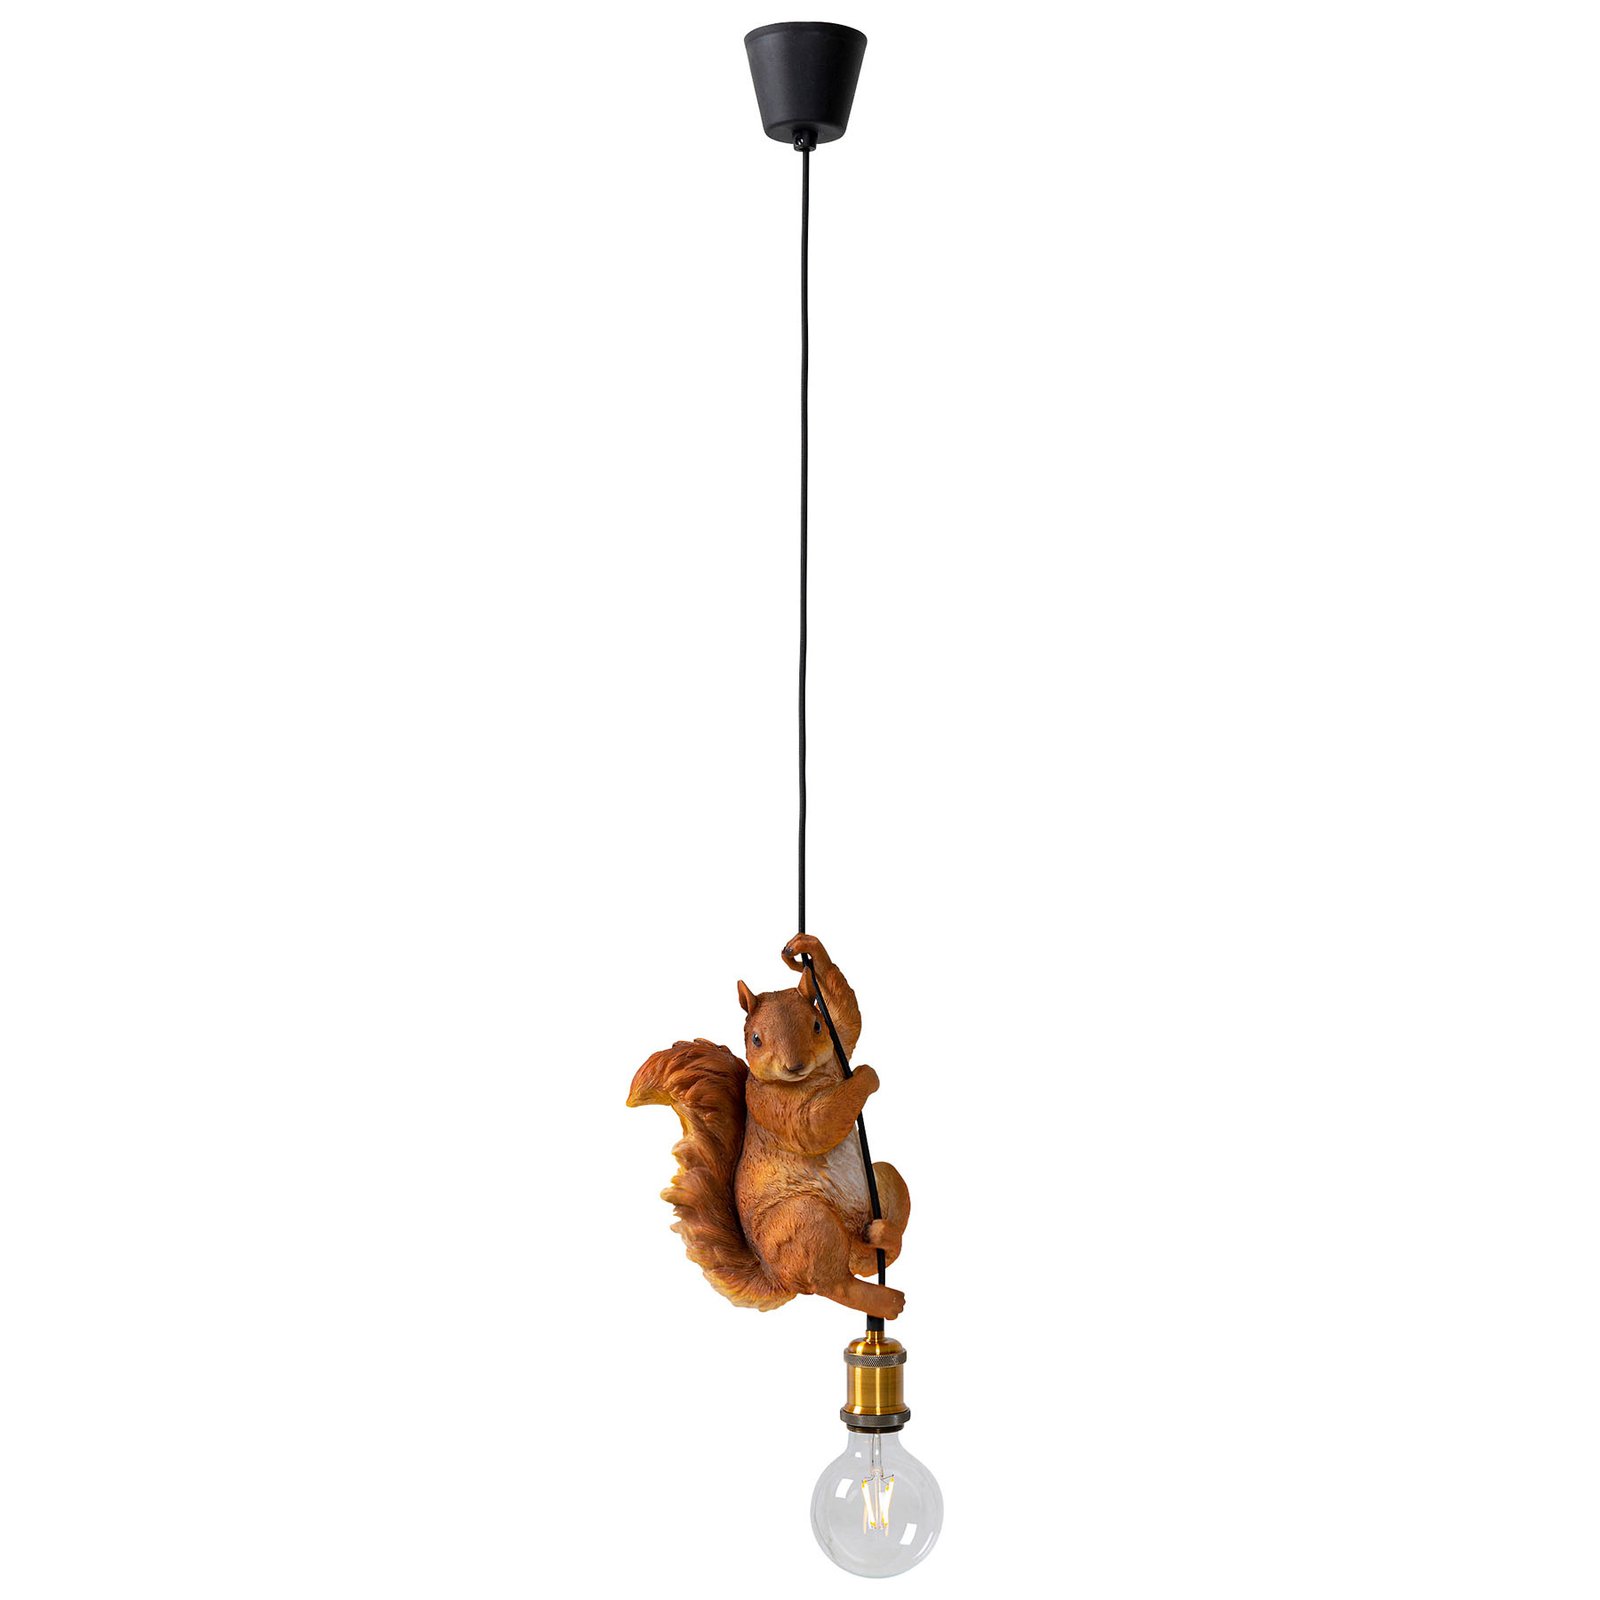 KARE Squirrel pendant light with squirrel model